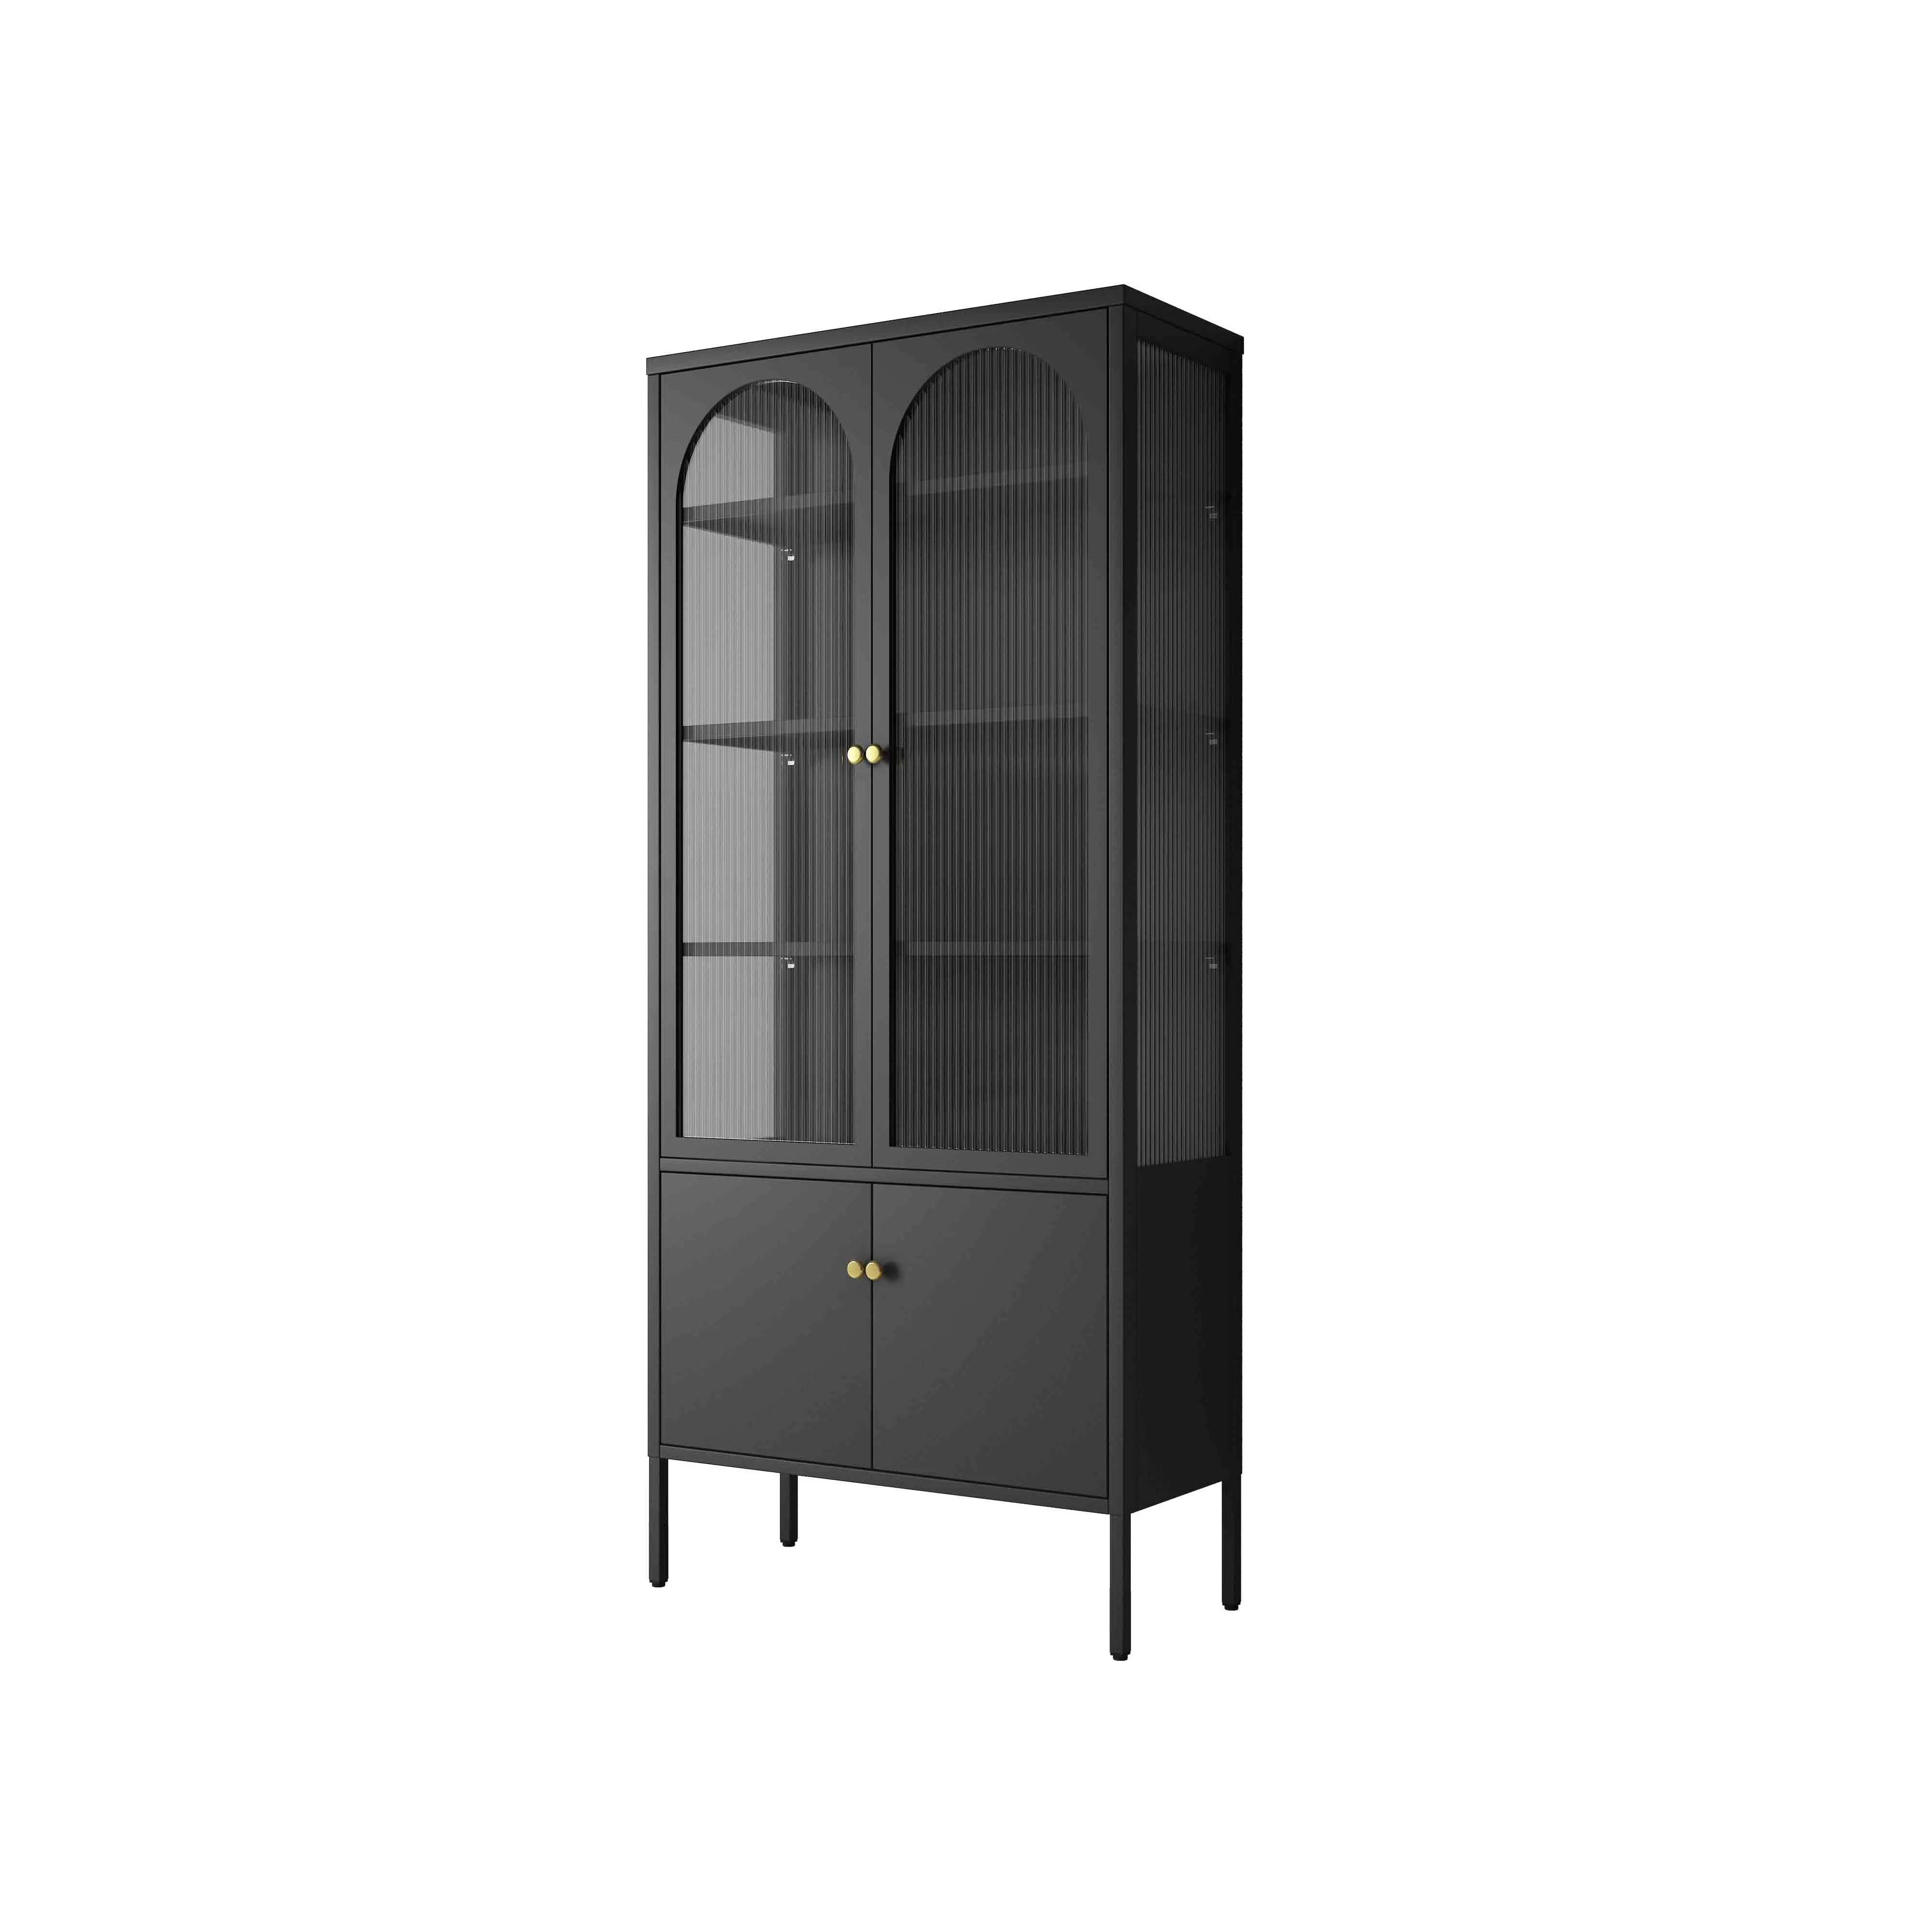 Steel furniture Black home office cabinet high storage cabinet steel bookcase metal cupboard with 2 glass Arc door